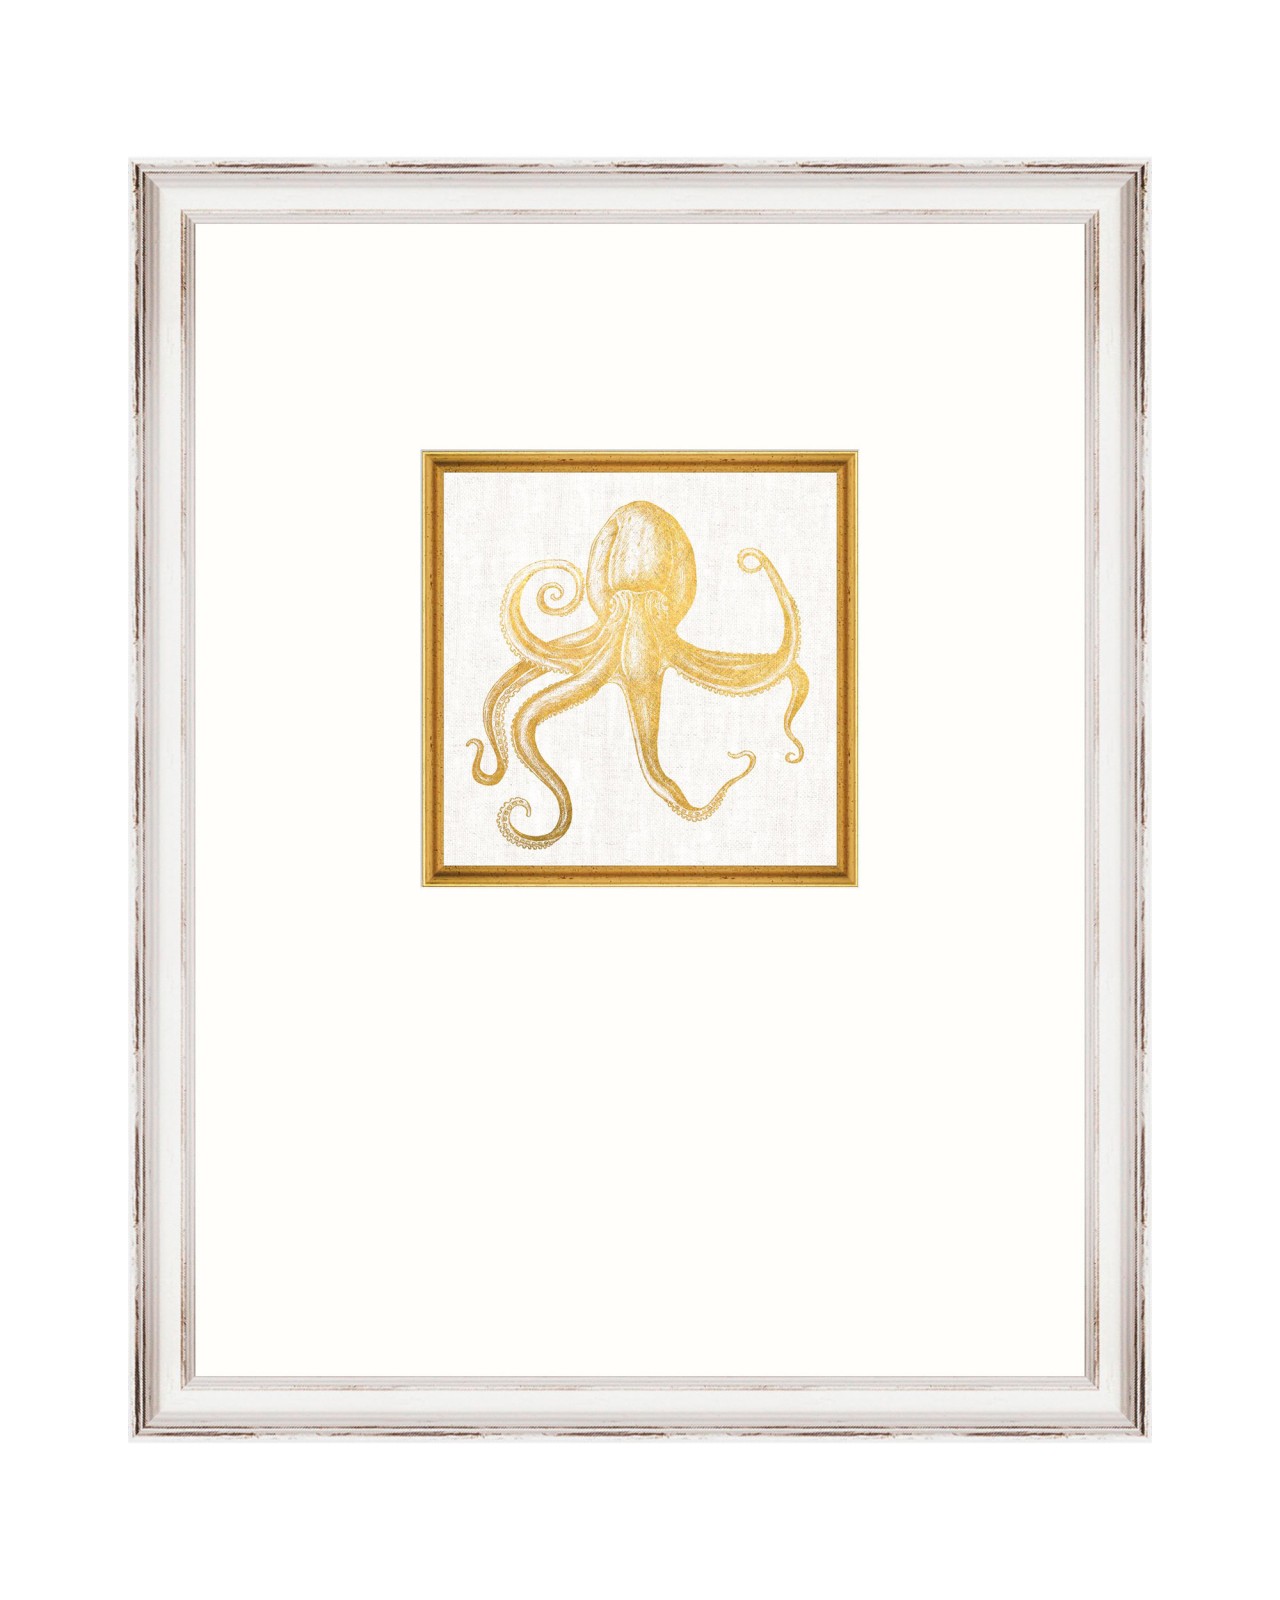 images/productimages/small/framed-linen-octopus-framed-art-35x45cm-fa13286.jpg